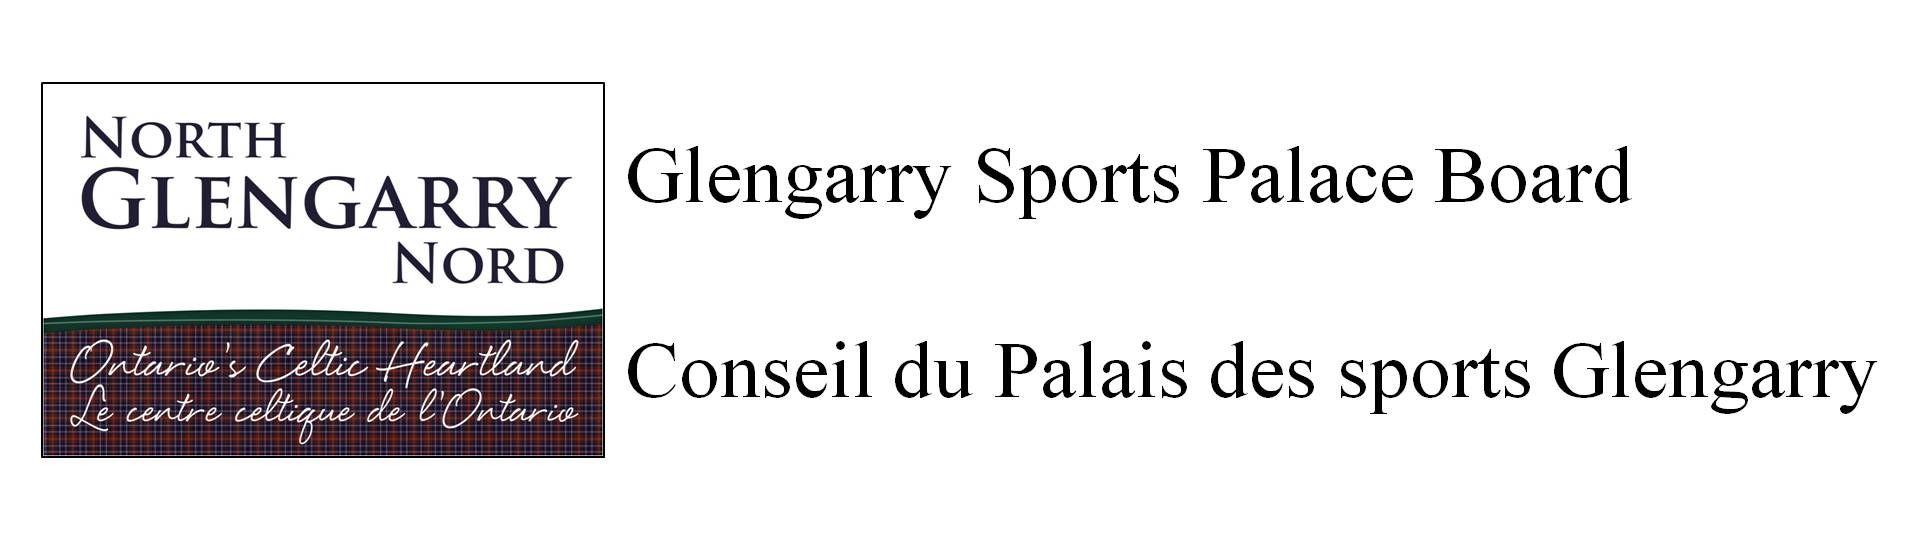 Sports Palace Logo - Glengarry Sports Palace of North Glengarry